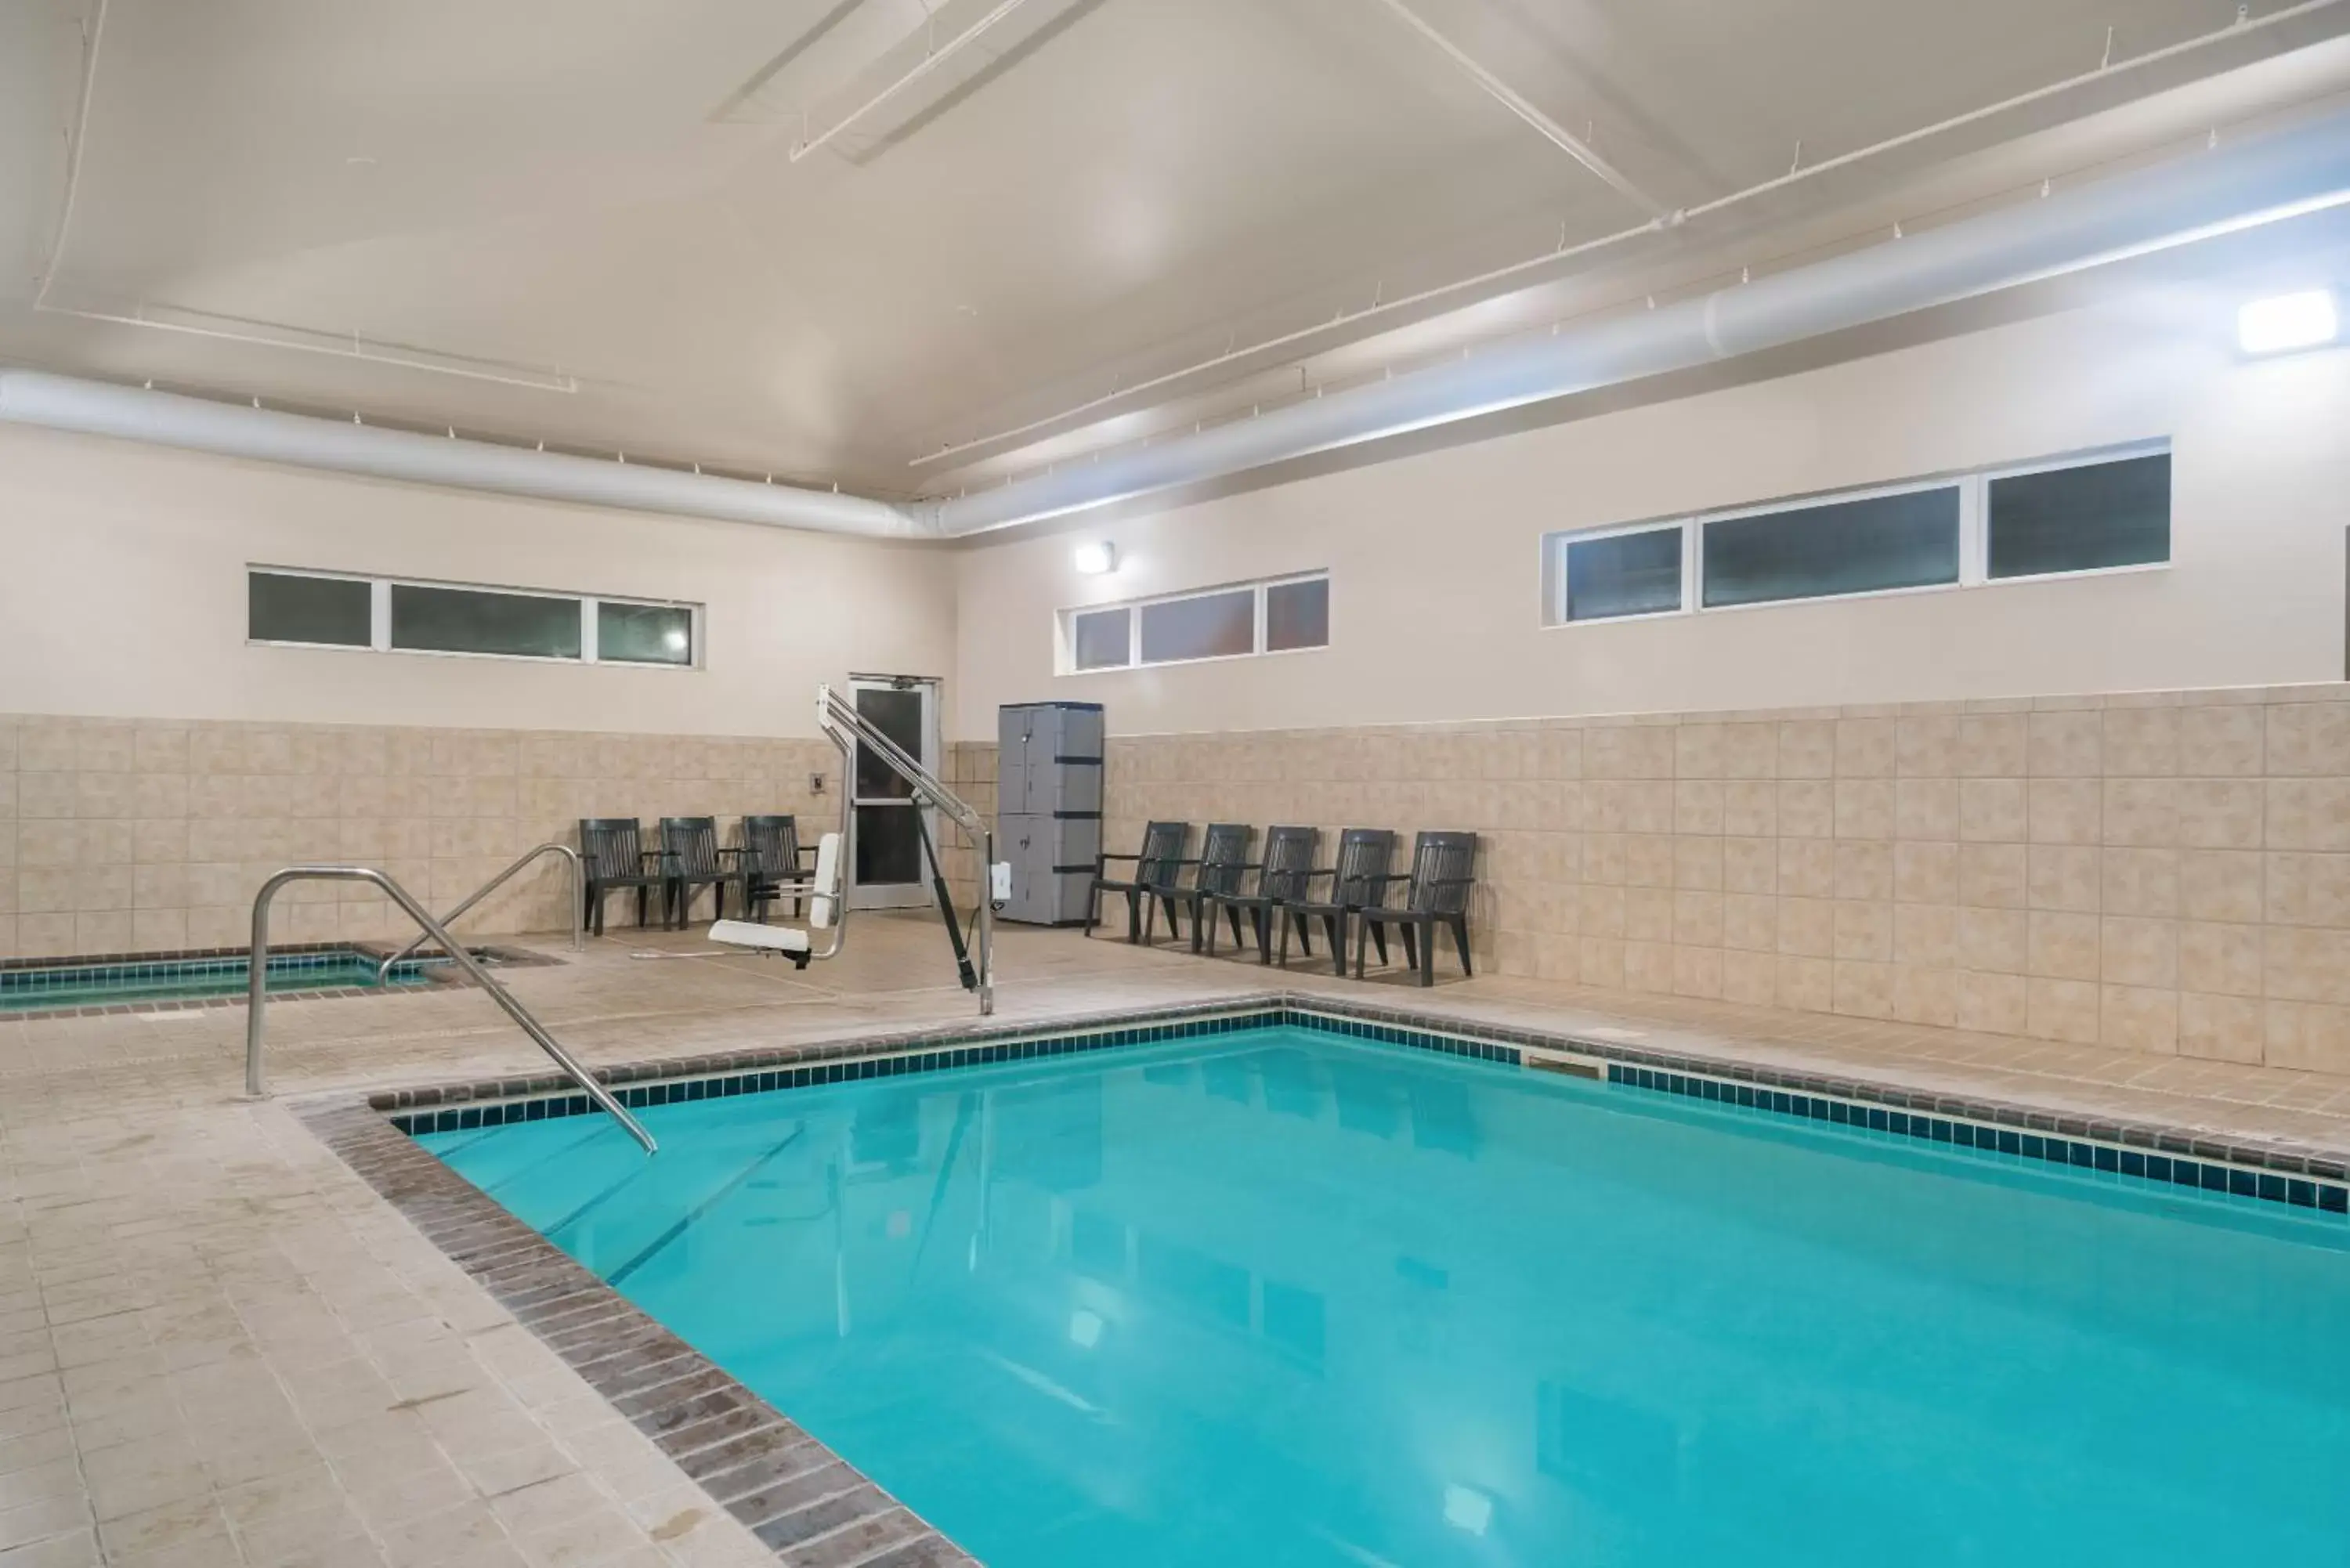 Swimming Pool in Microtel Inn & Suites by Wyndham Springfield